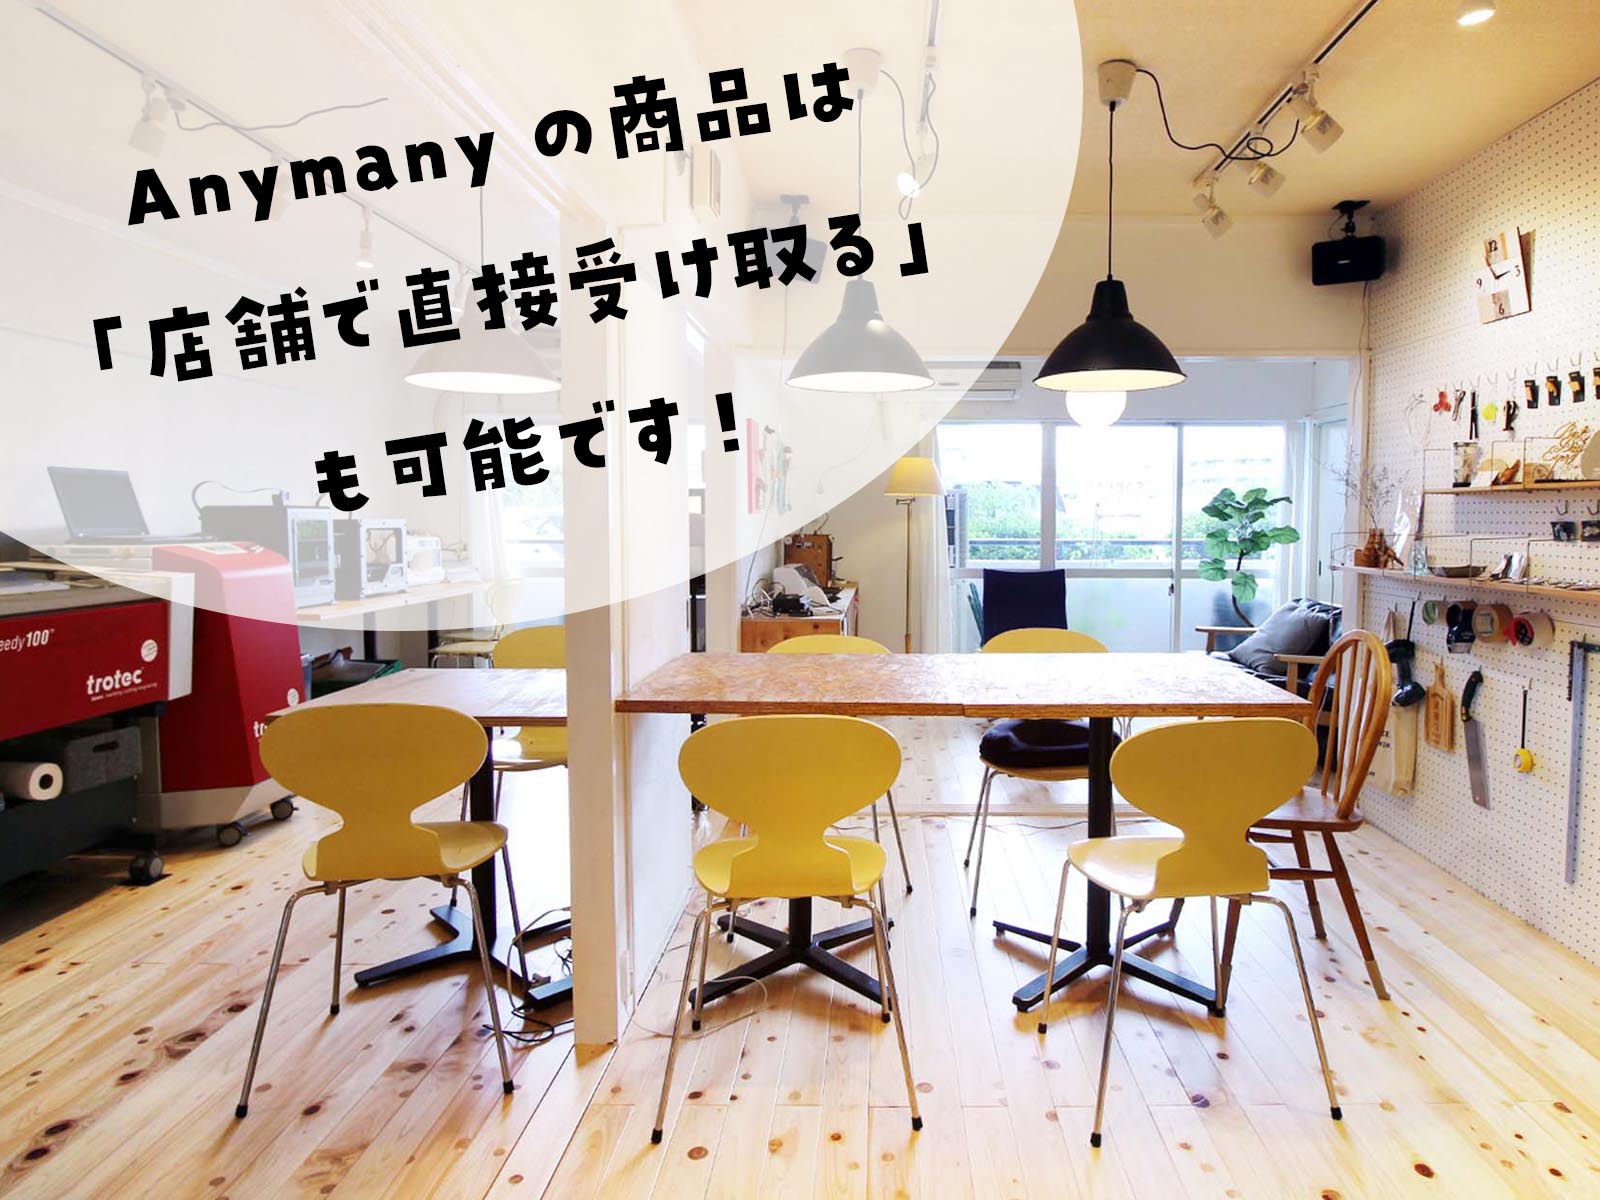 Anymanyの制作拠点（福岡市）にお近くの方、店舗での受け取りも可能です！